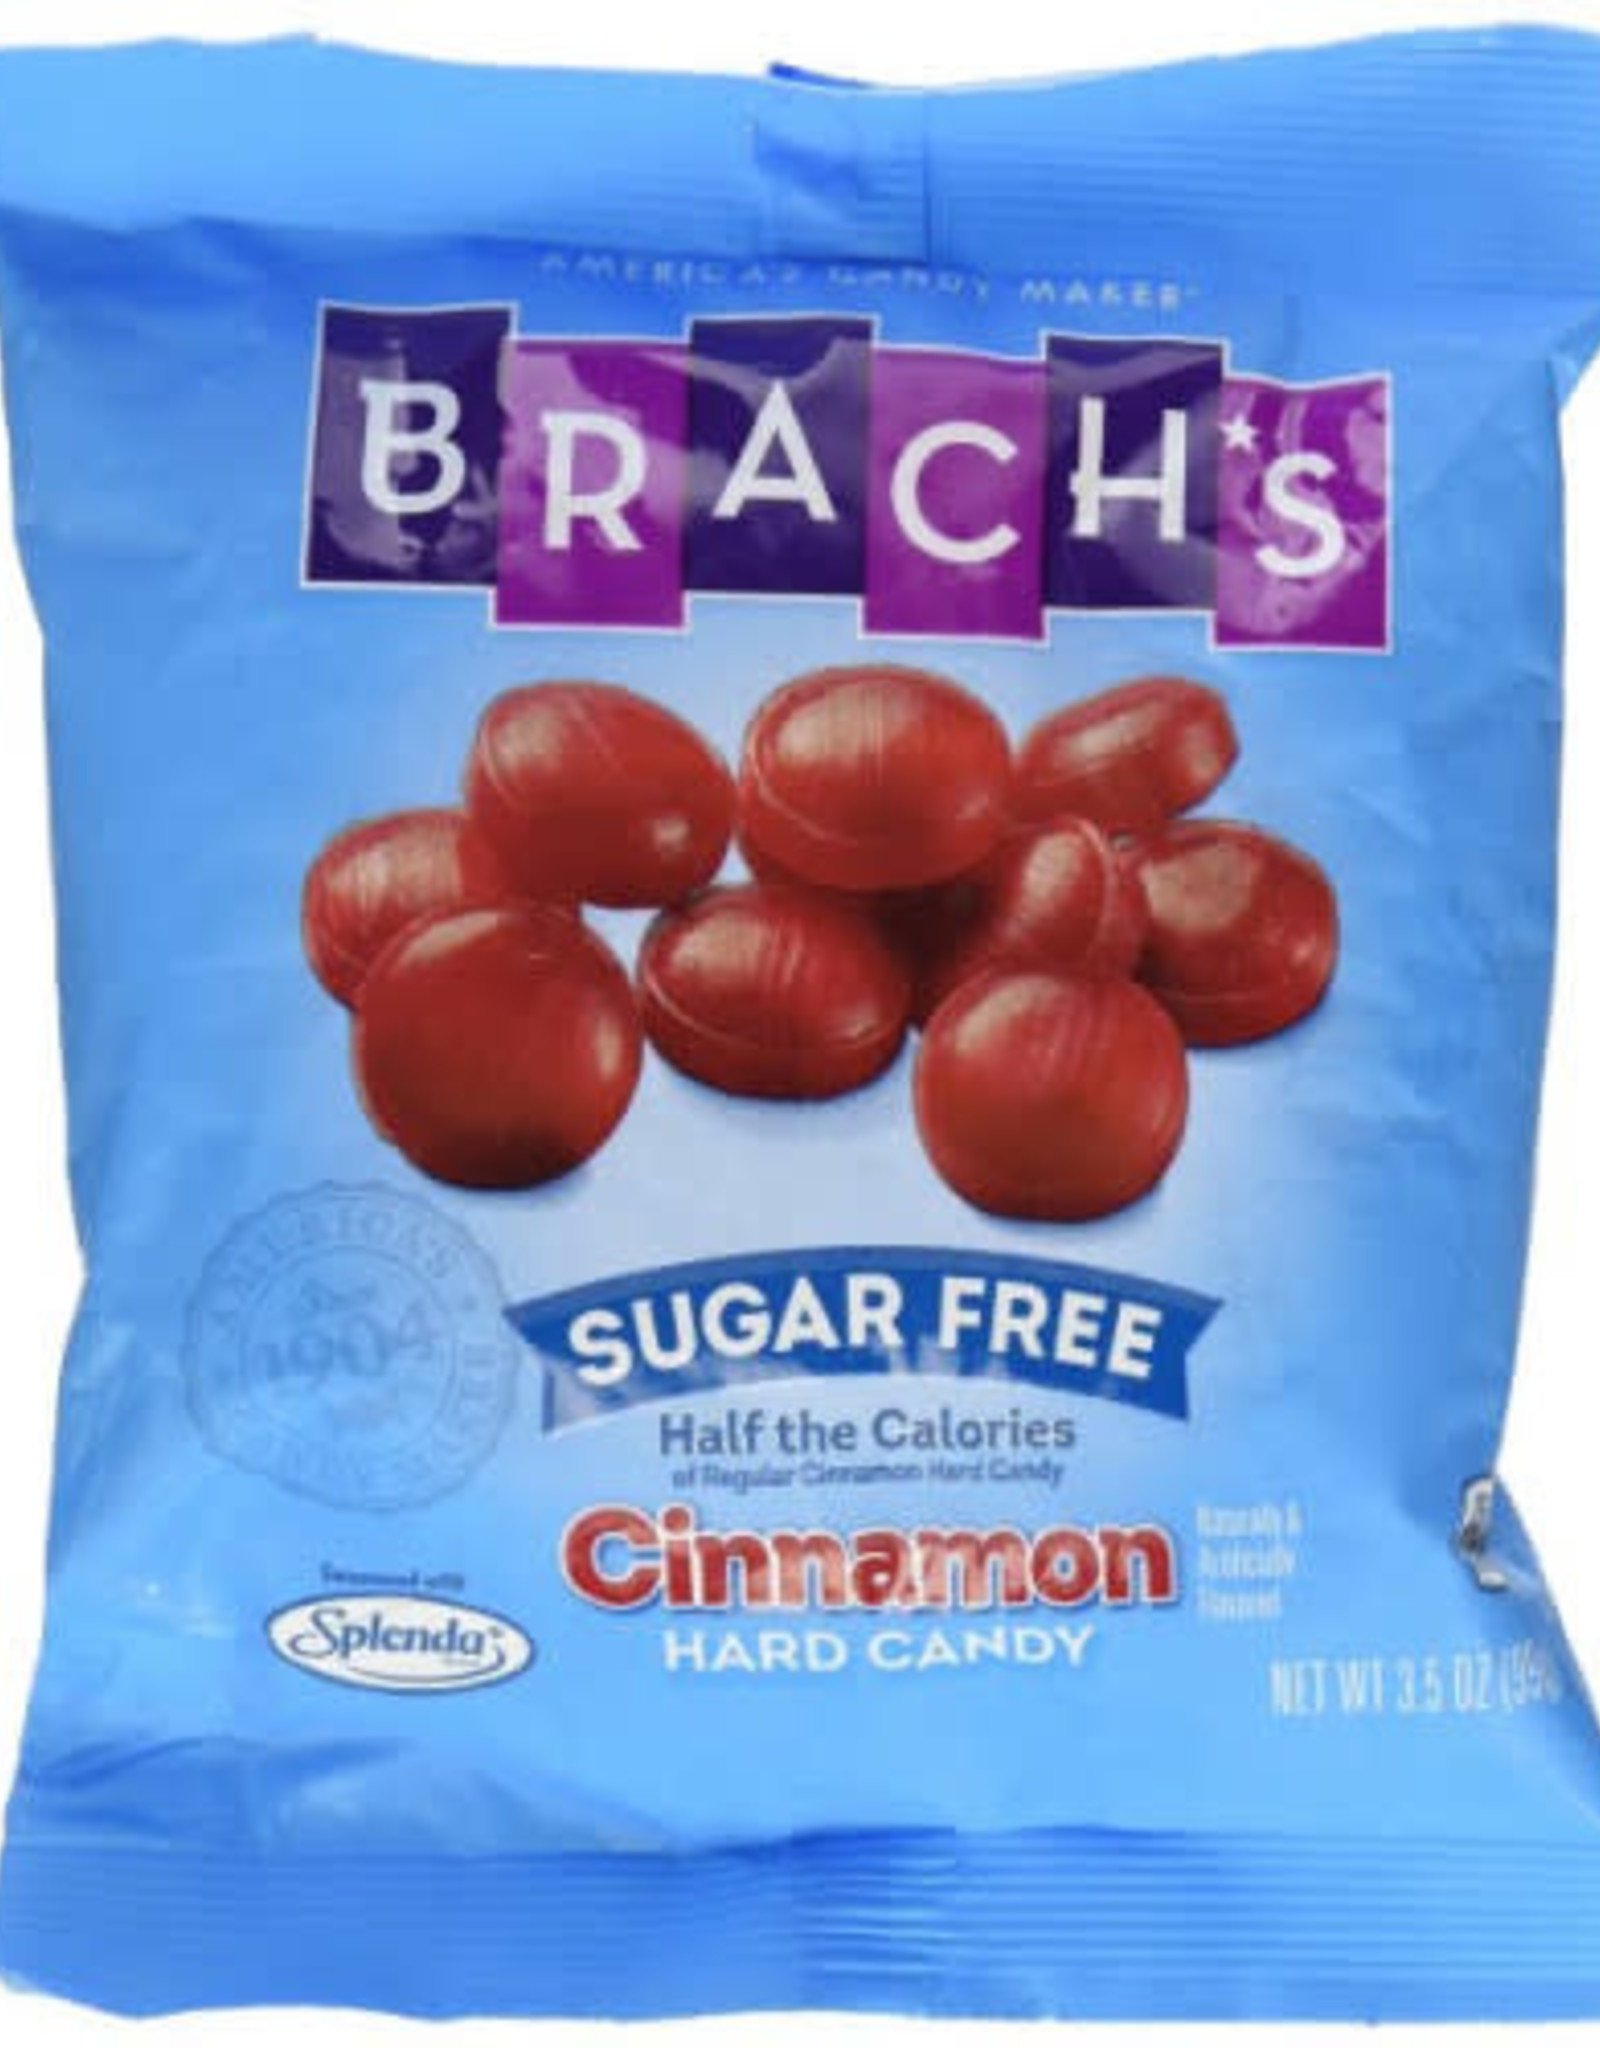 Brach's Brach's Candy Cinnamon Bag